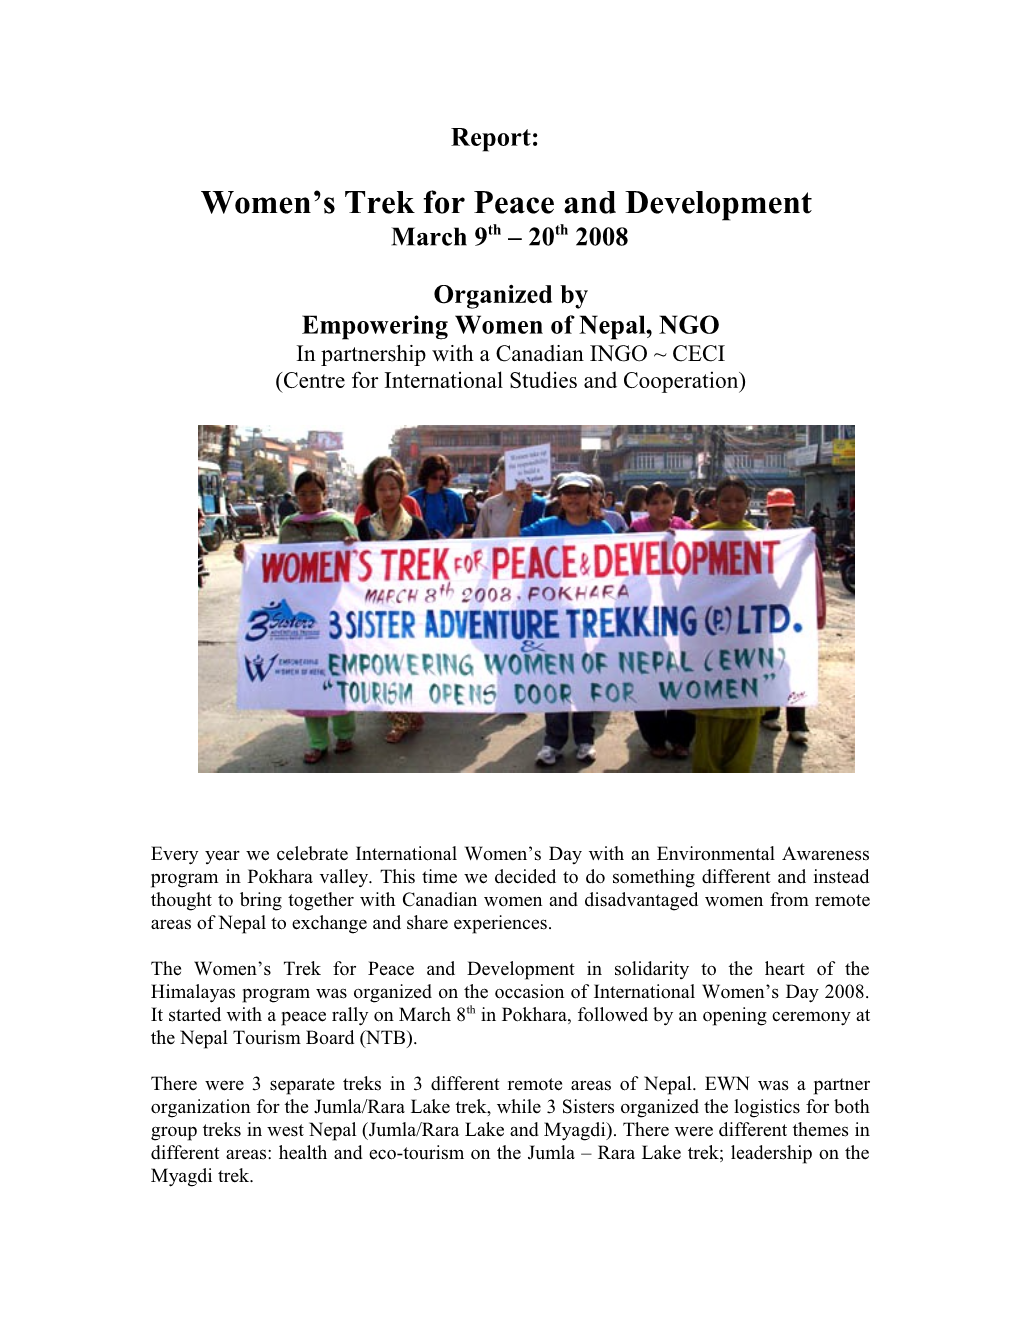 Women Trek for Peace and Development